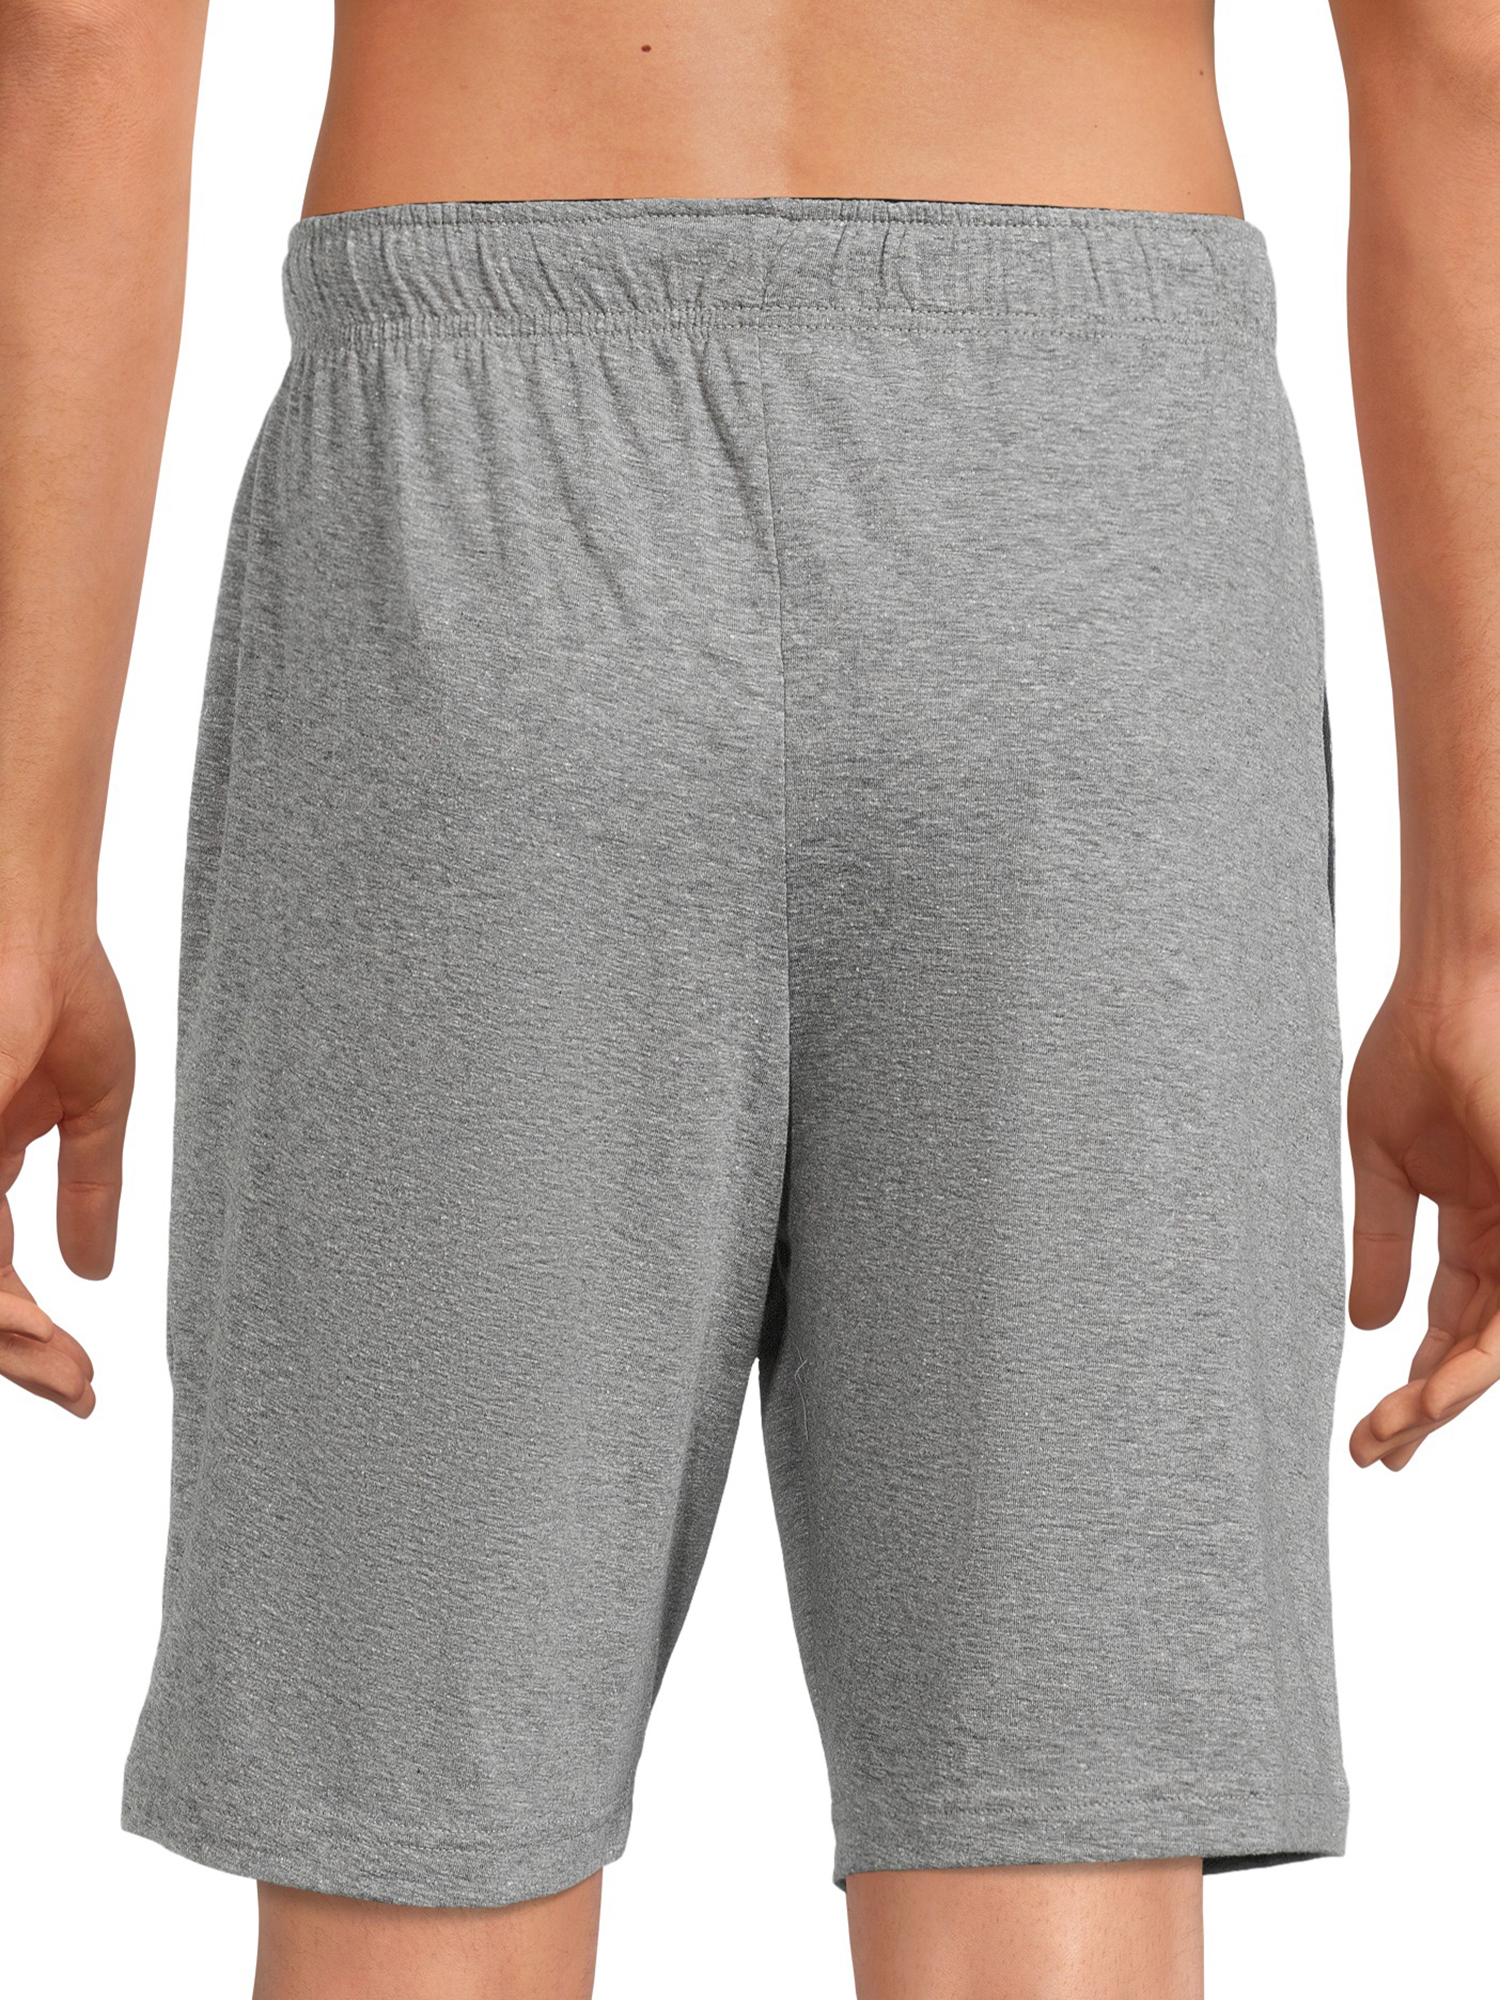 Hanes Men's and Big Men's X-temp Knit Jam Shorts, 2-Pack - image 3 of 3